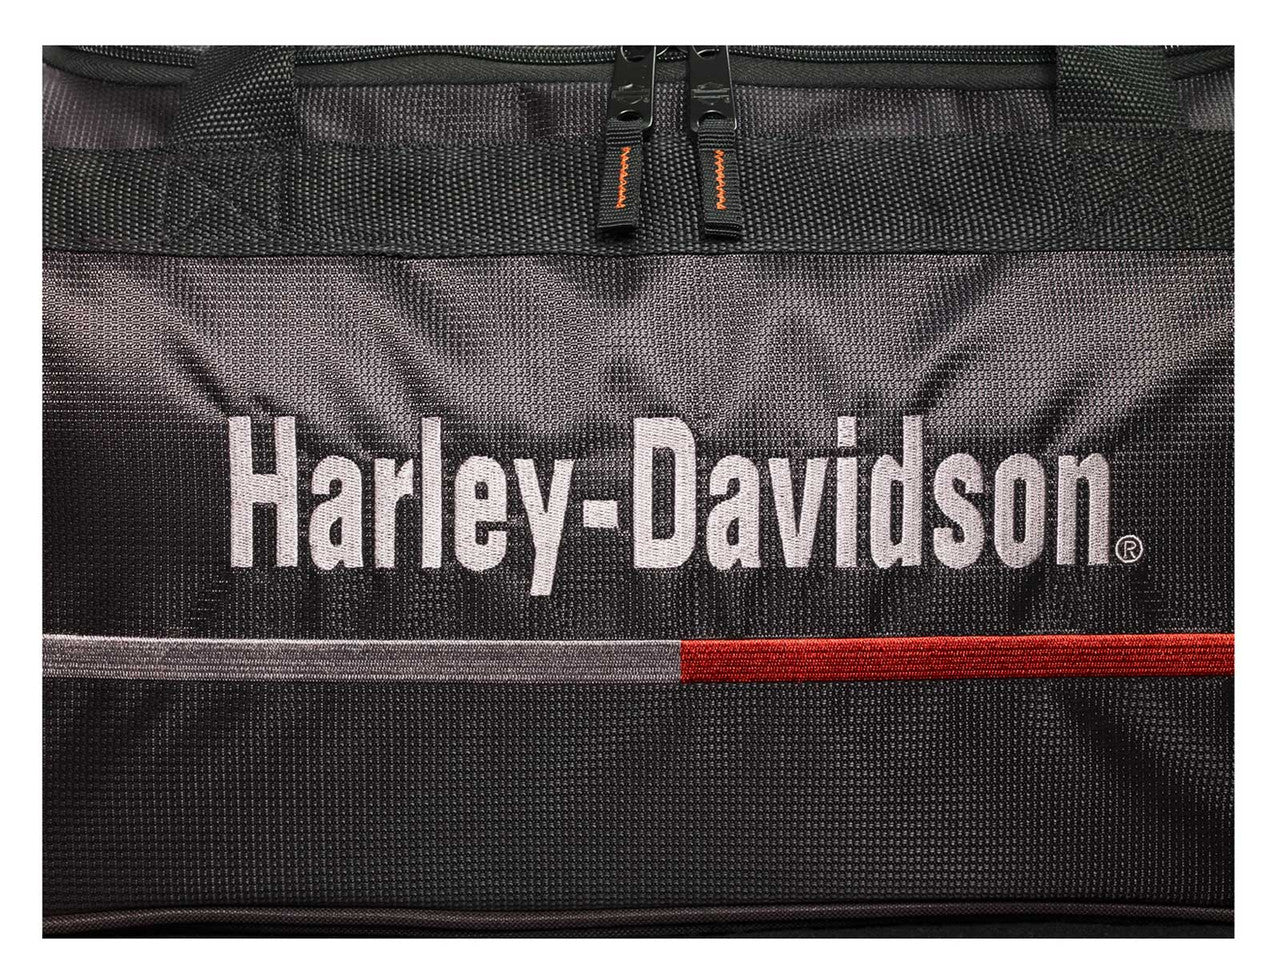 Harley-Davidson® On Tour Sports Duffel Bag w/ Shoulder Strap - Midnight Black